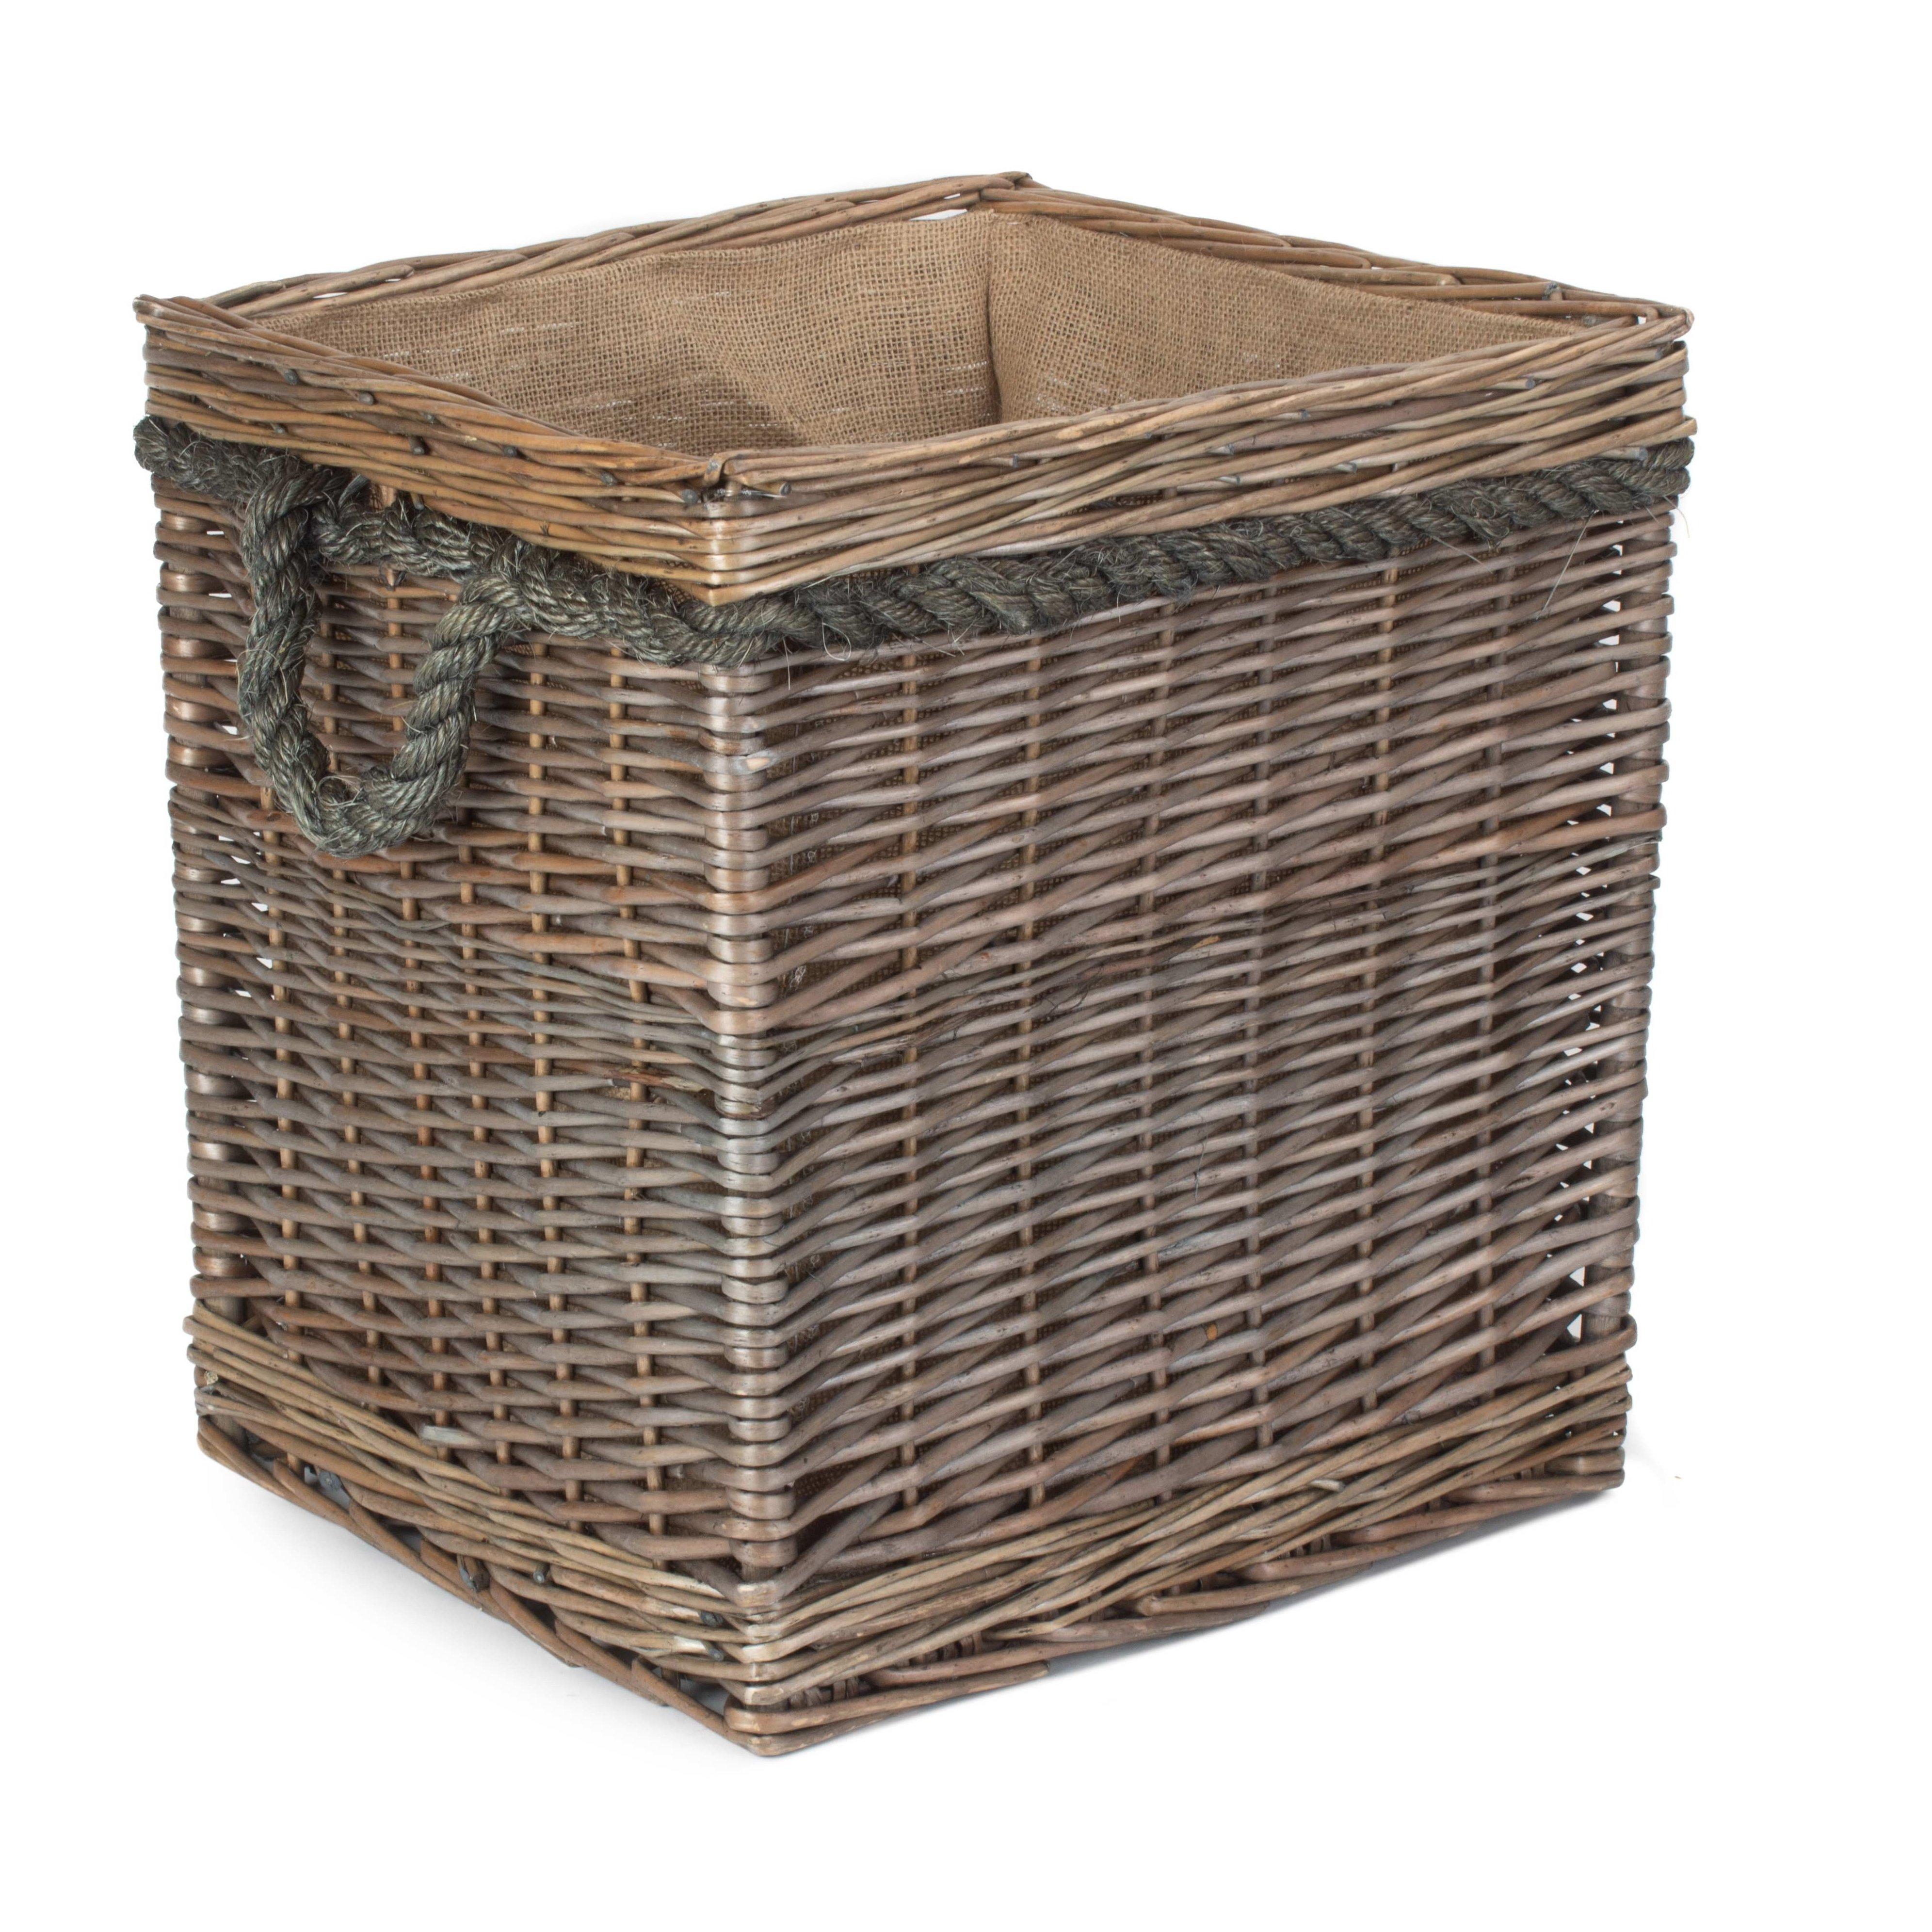 Wicker Square Rope Handled Log Storage Basket